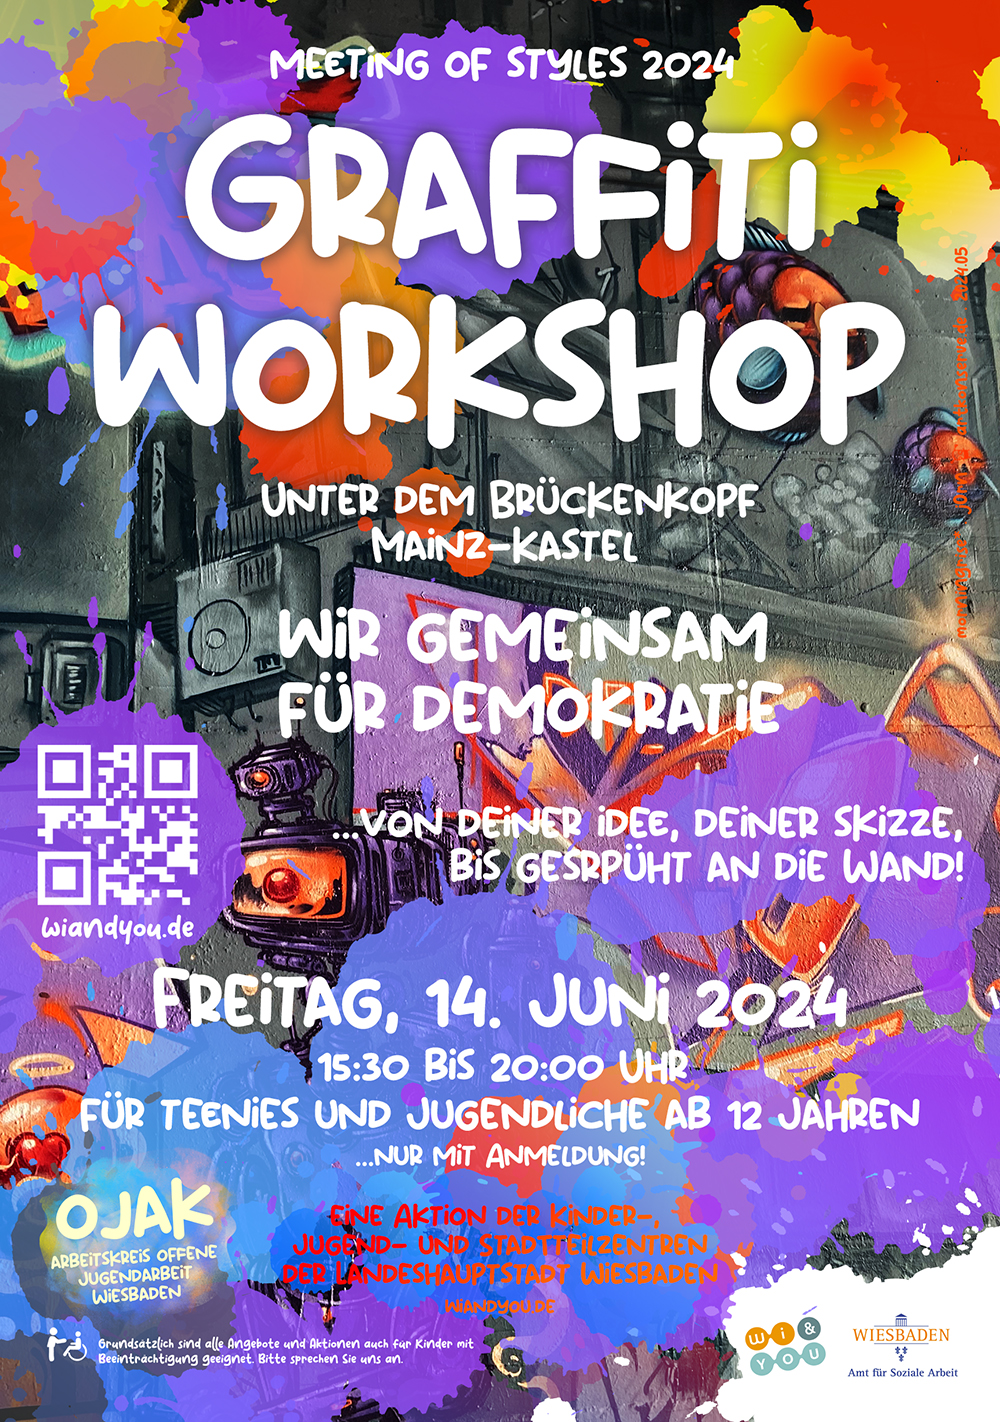 Graffiti Workshop 2024 . meeting of styles 2024 . 14. Juni 2024 . OJAK . Arbeitskreis Offene Jugendarbeit Wiesbaden